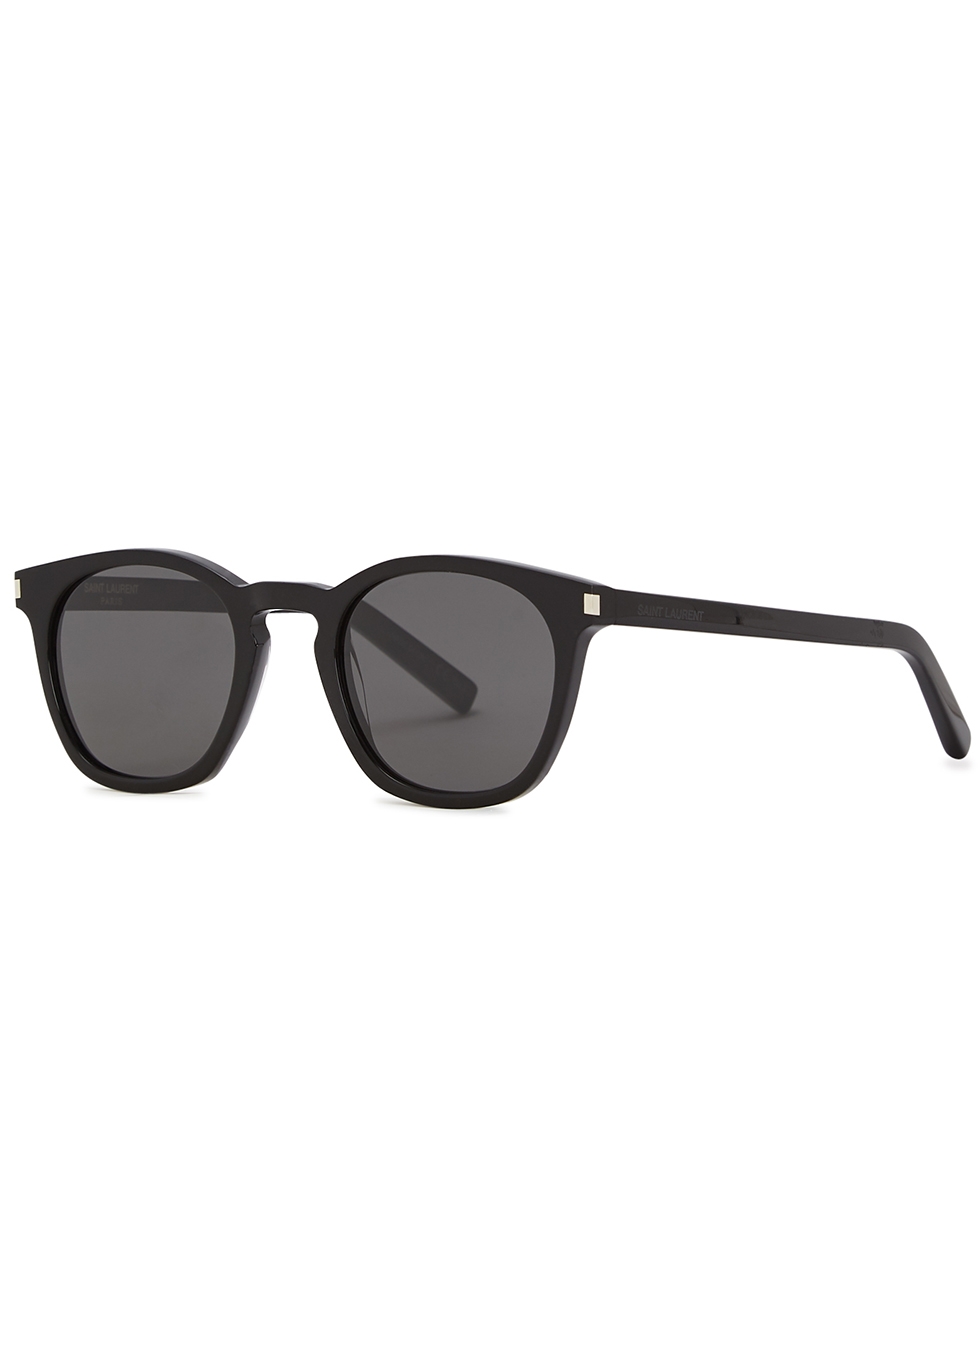 Saint Laurent SL28 black wayfarer-style sunglasses - Harvey Nichols